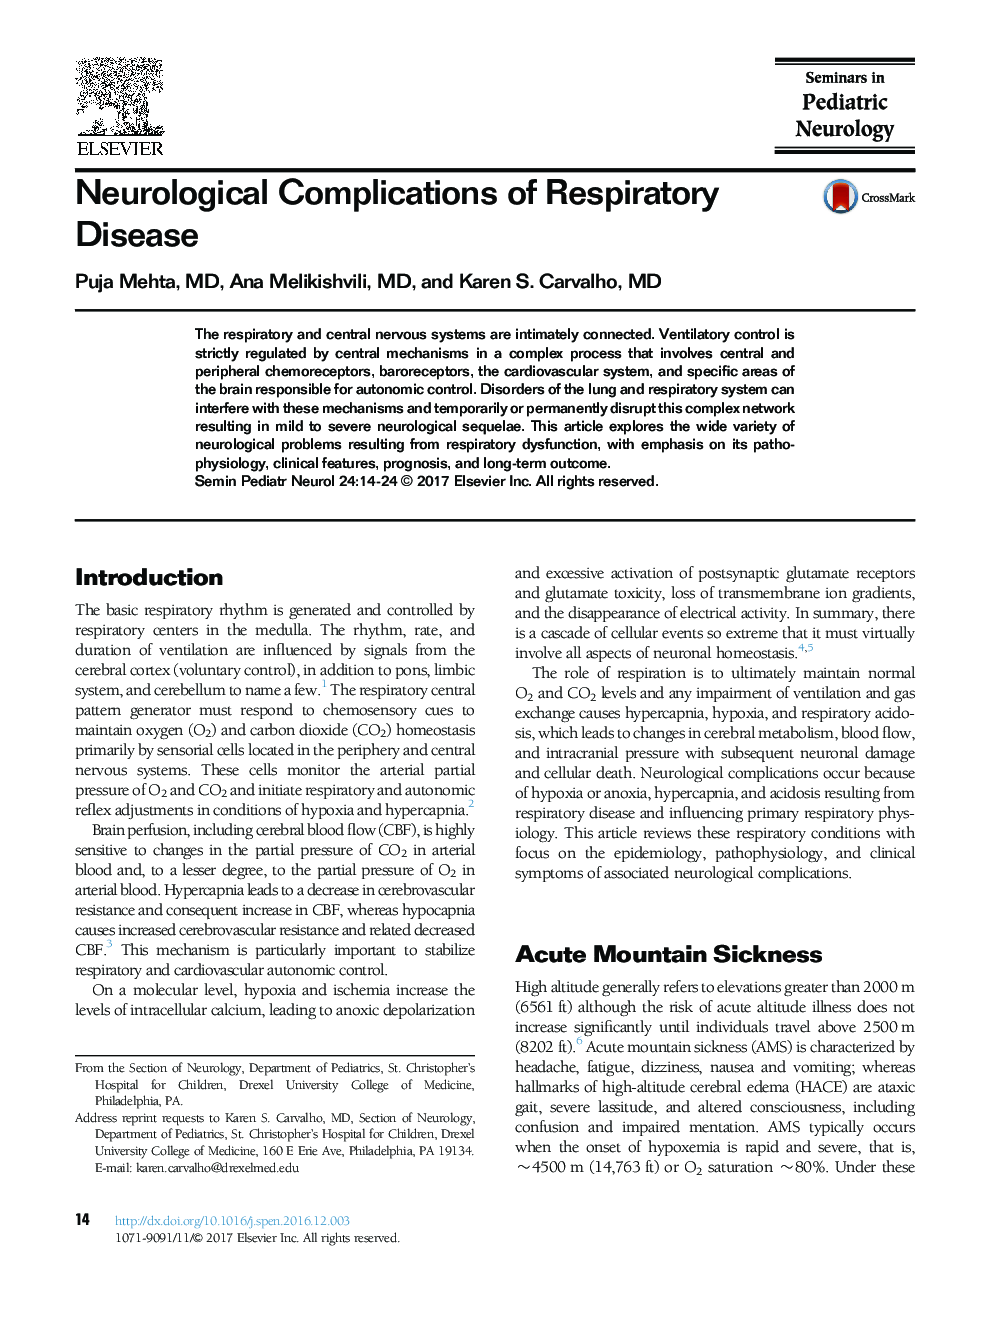 Neurological Complications of Respiratory Disease